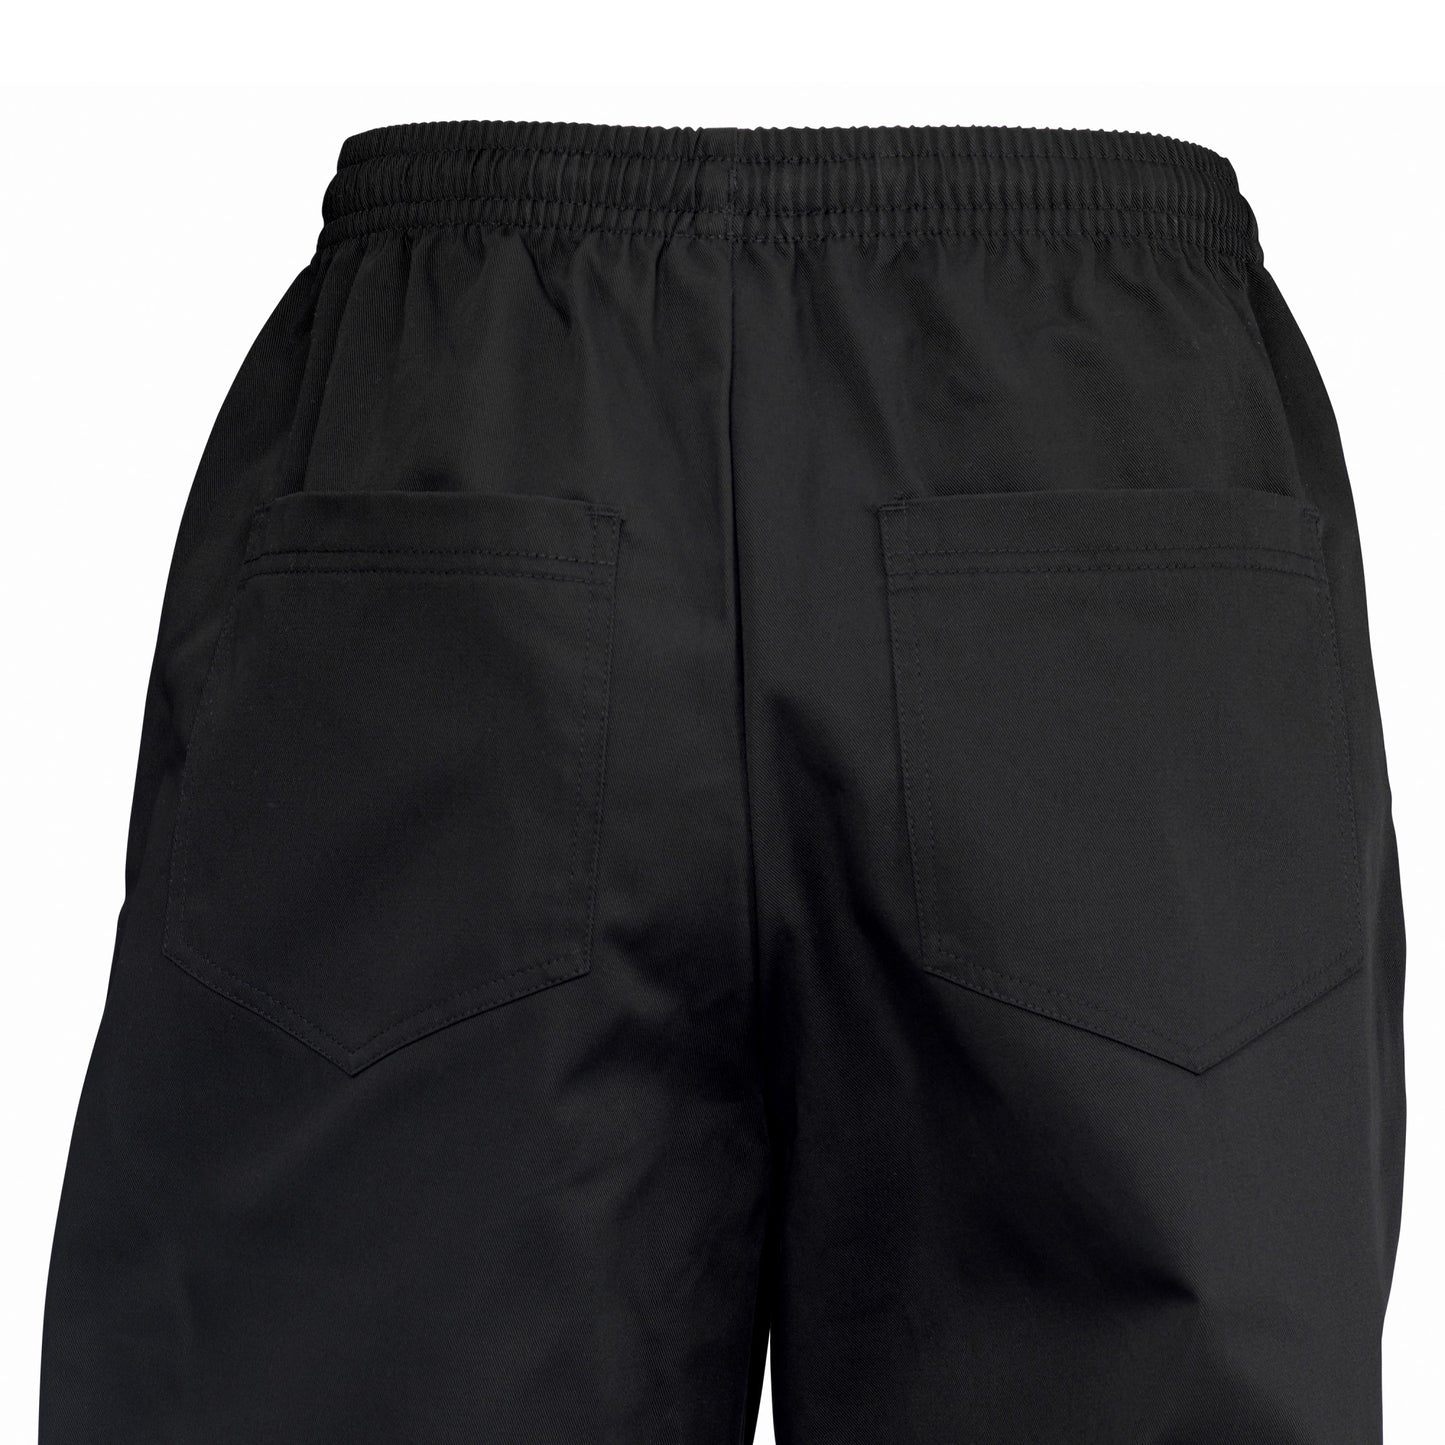 UNF-2KM - Chef Pants, Black - Medium